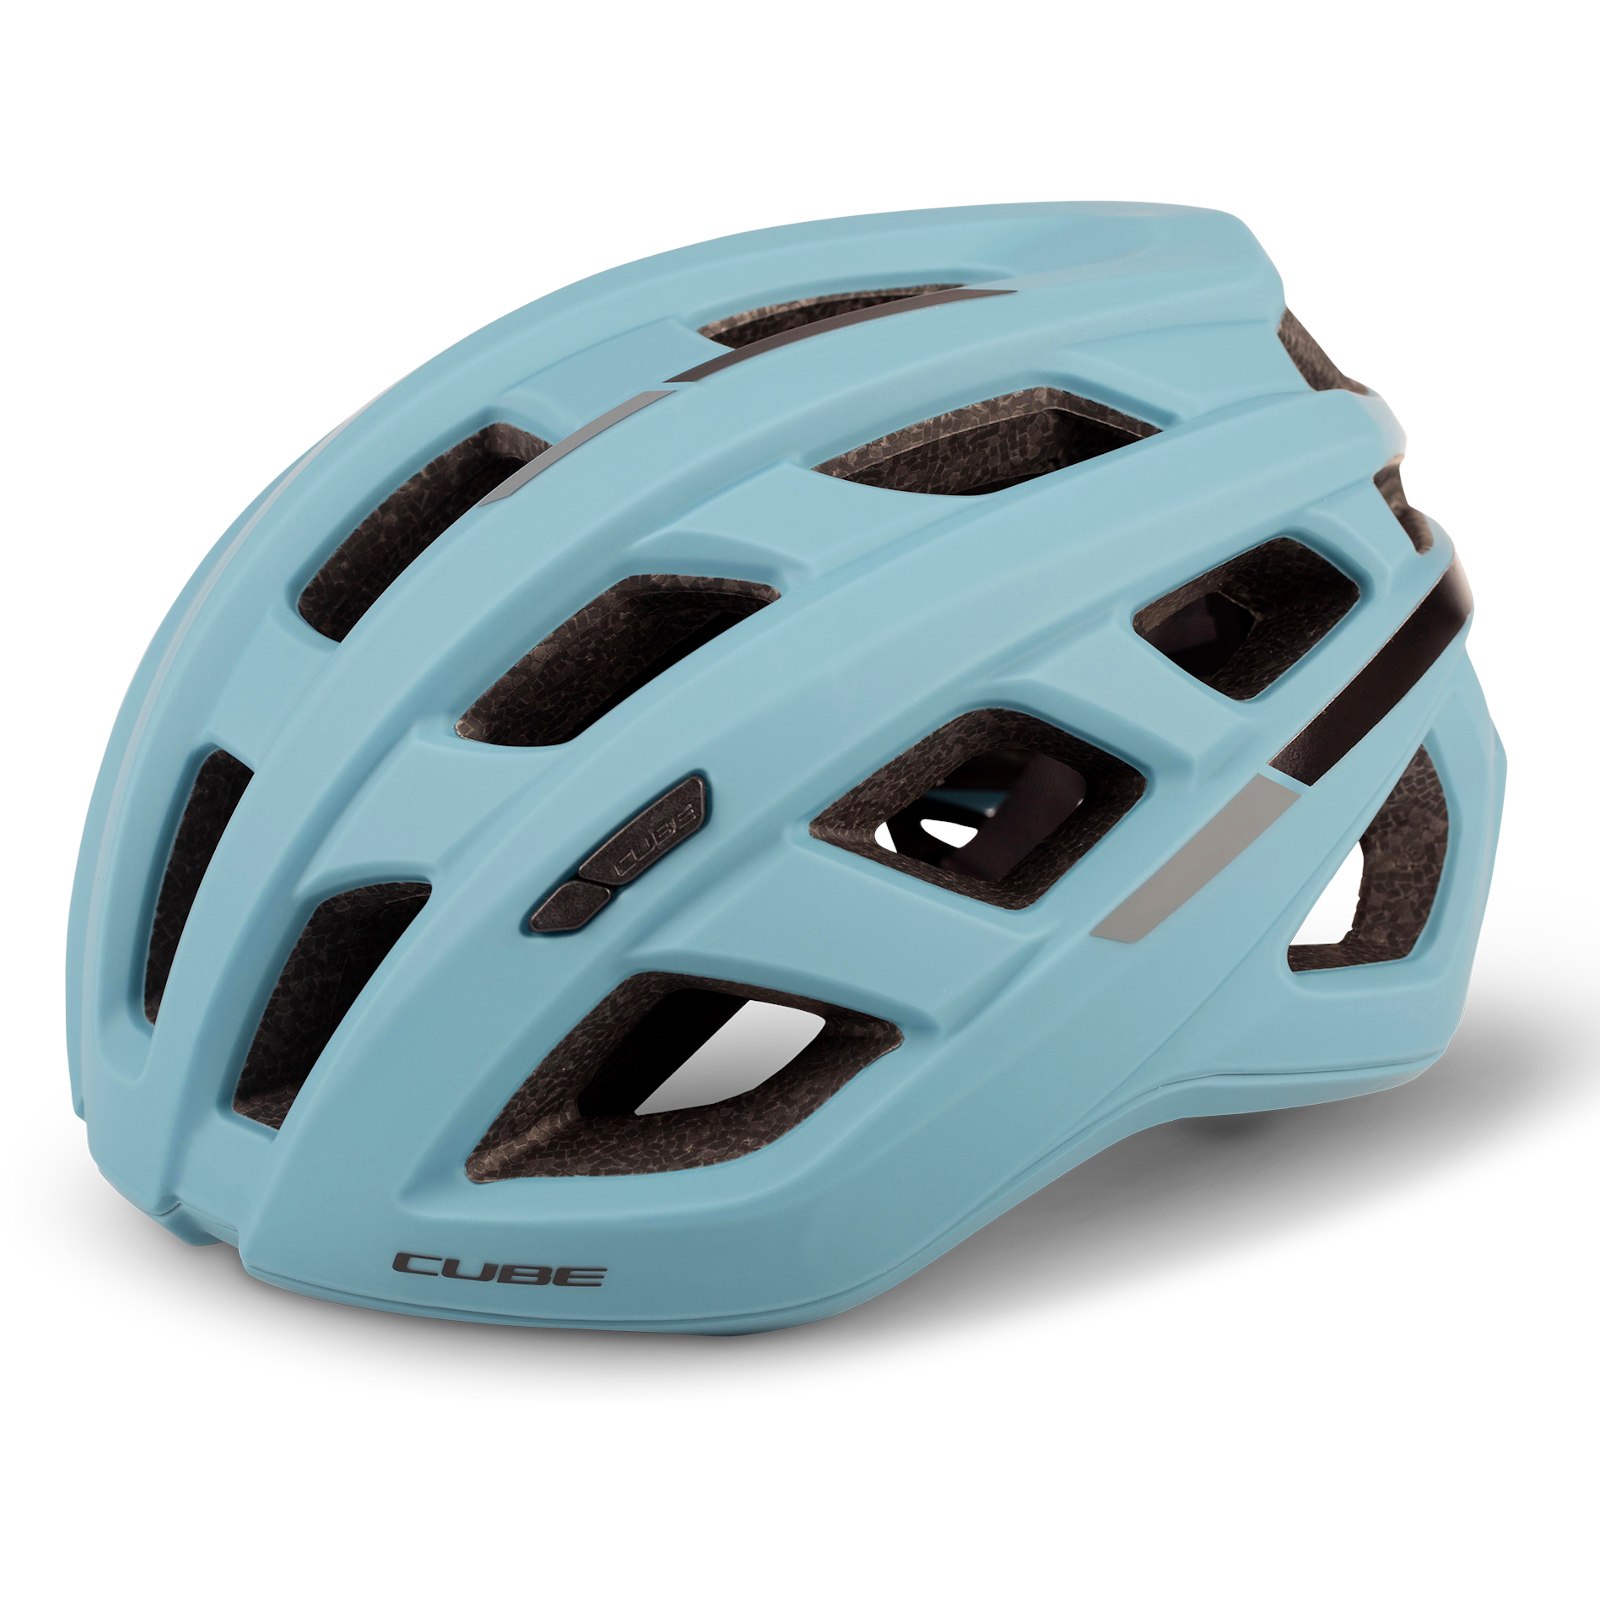 Picture of CUBE ROAD RACE Helmet - storm blue